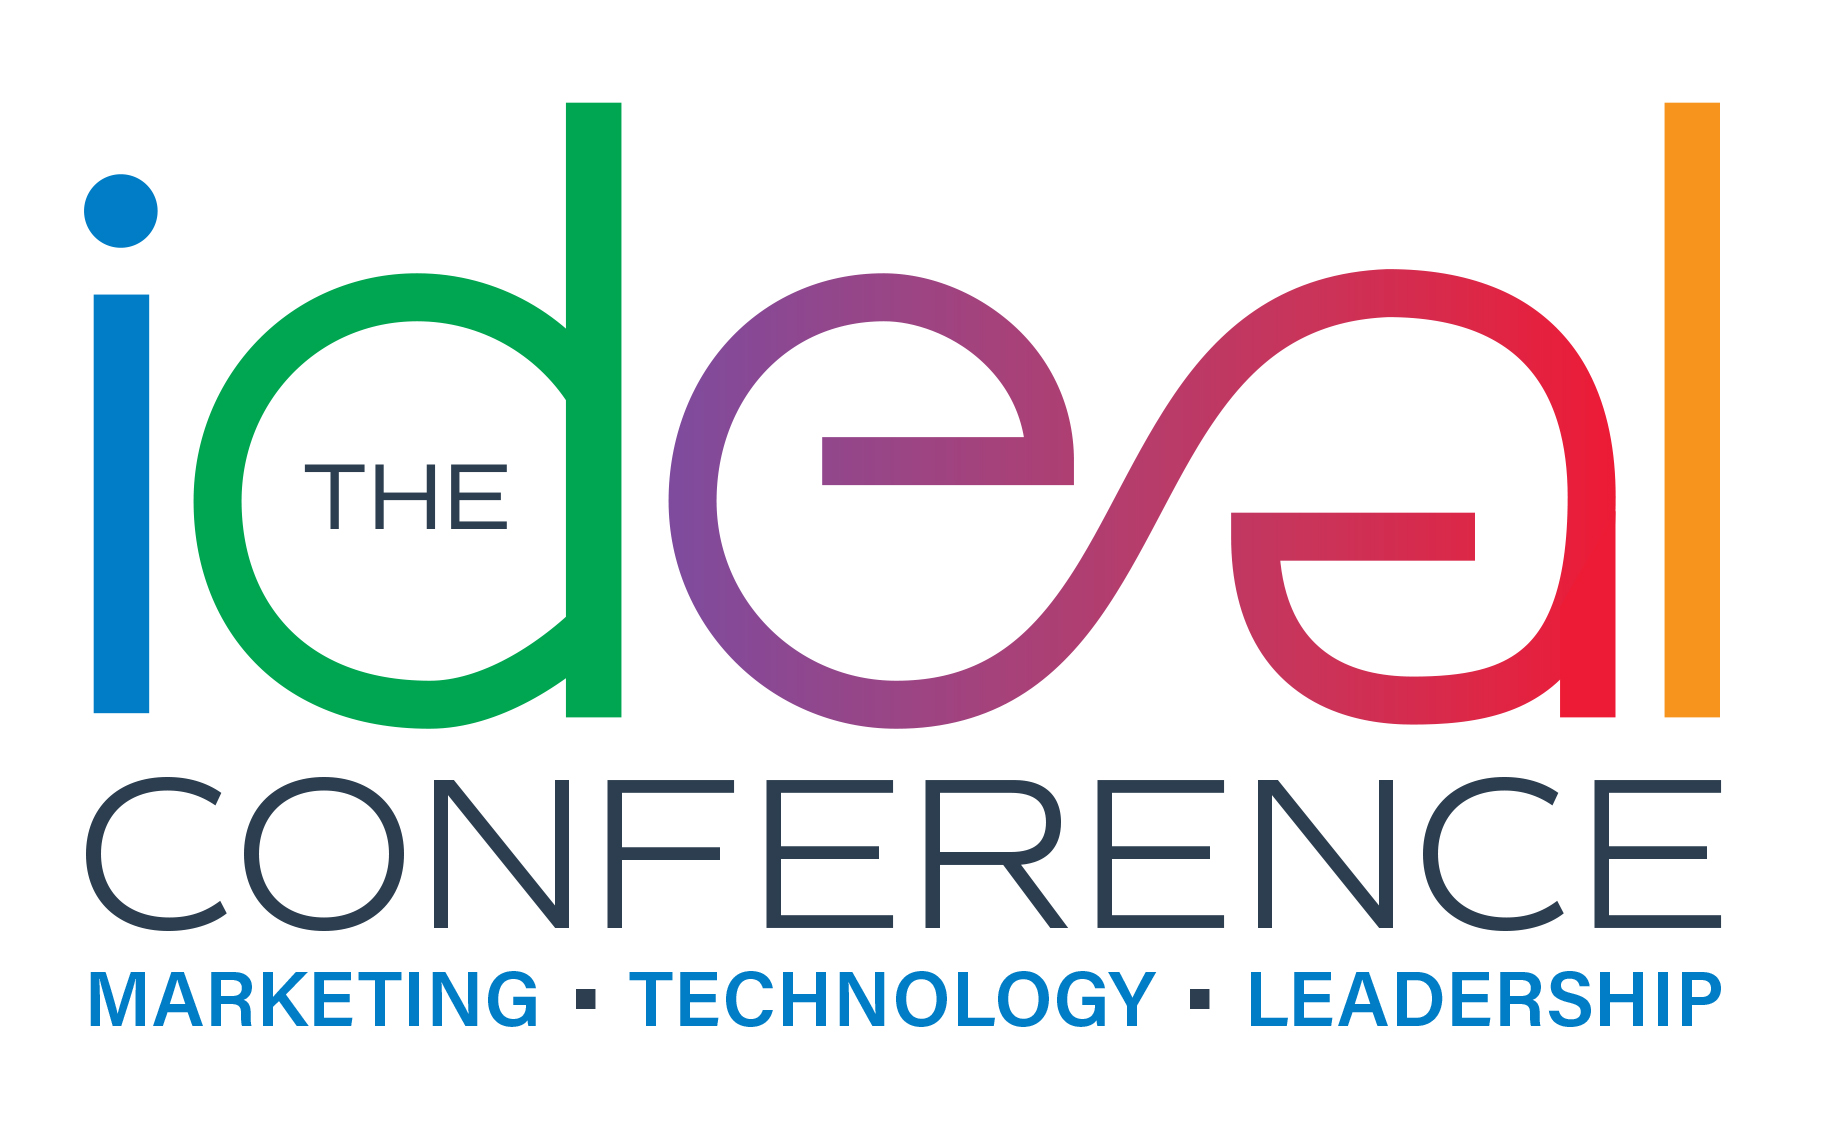 The IDEAL Conference SpeakerHub